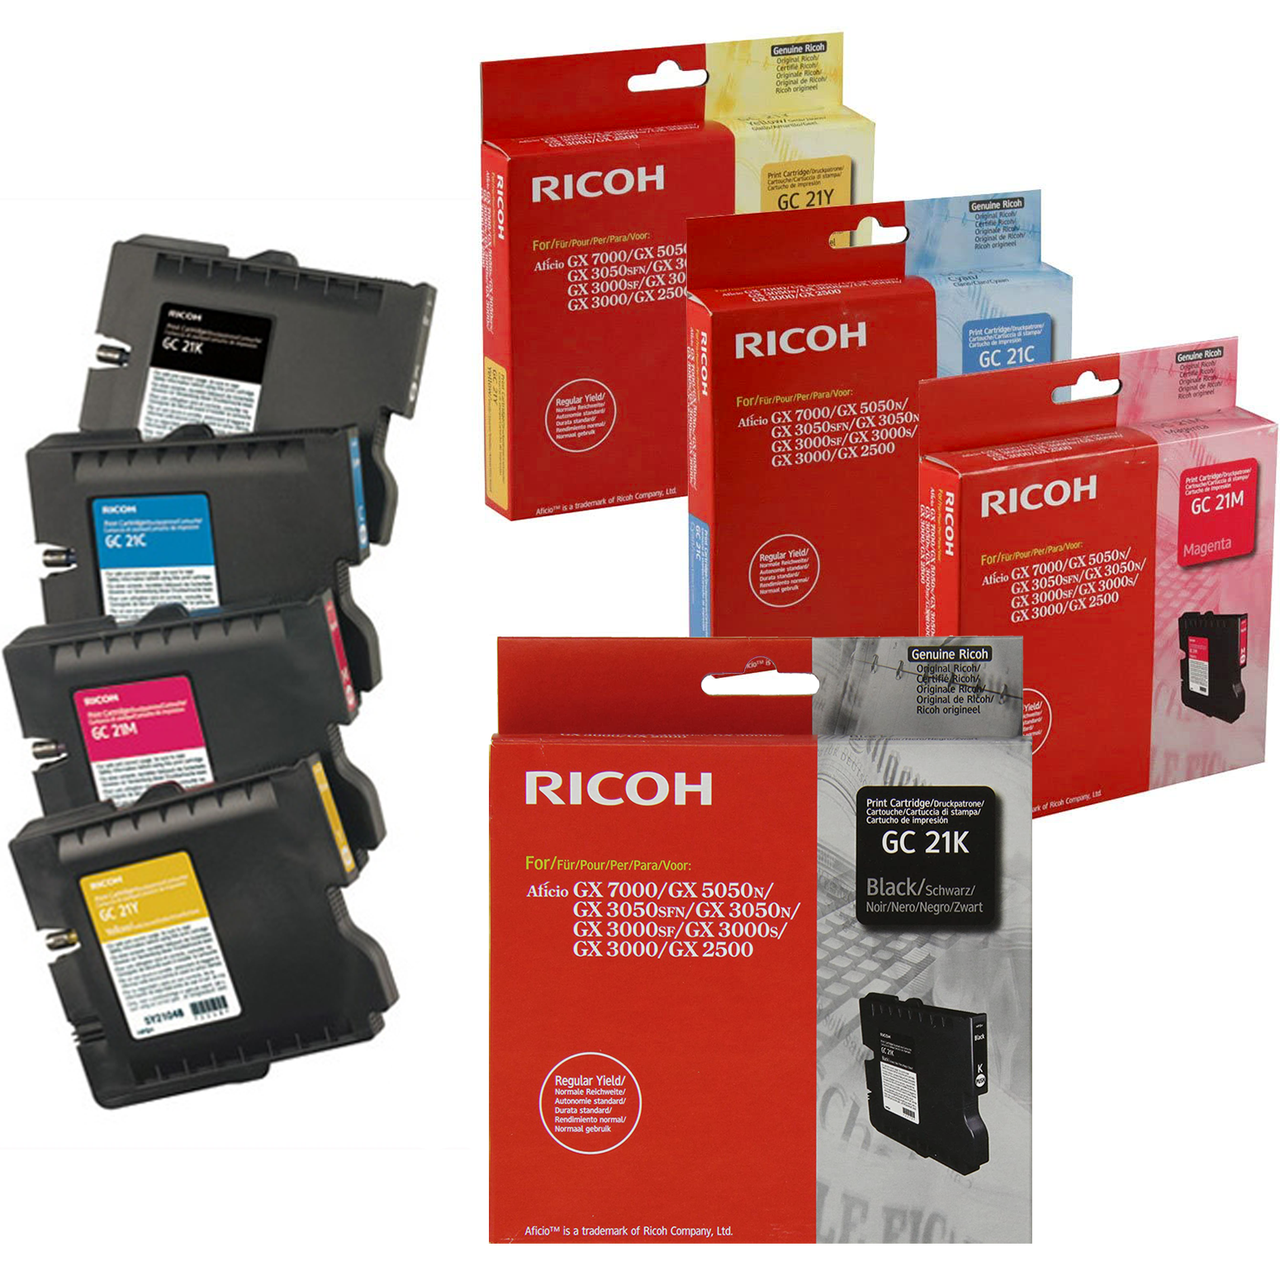 Ricoh GC21 Set | 405532, 405533, 405534, 405535 | Original Ricoh Laser  Toner Cartridges - Black, Cyan, Magenta, Yellow